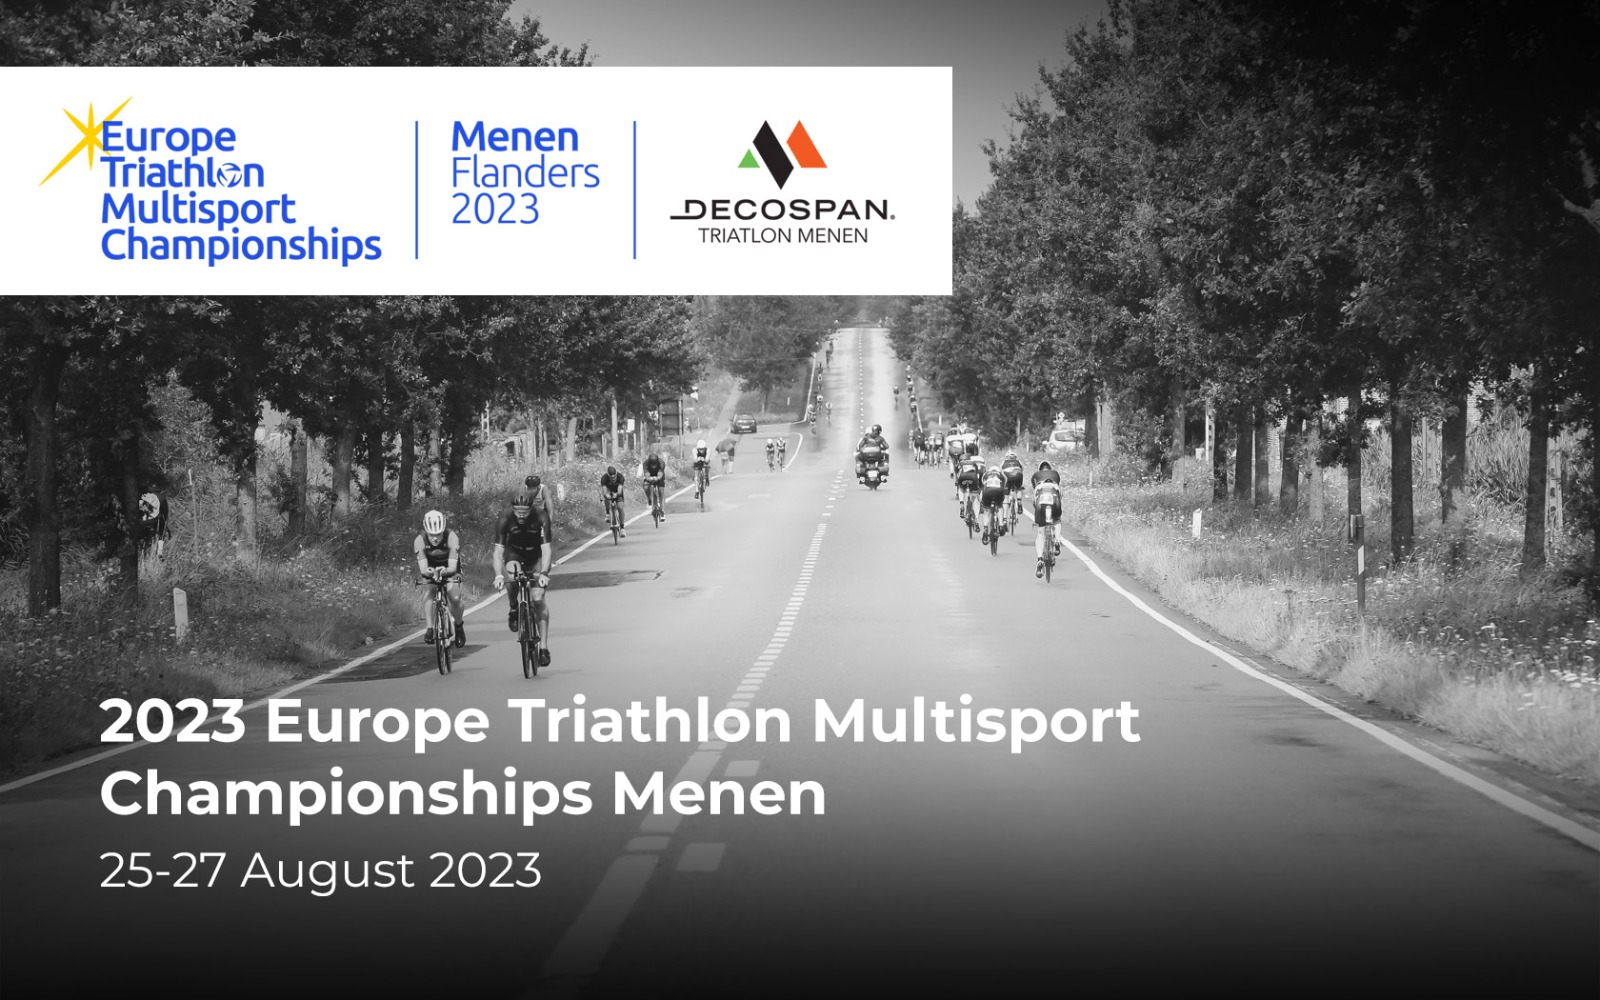 Europe Triathlon Multisport Championships Menen, si assegnano i titoli Aquathlon e Middle Distance. Gli azzurri in gara